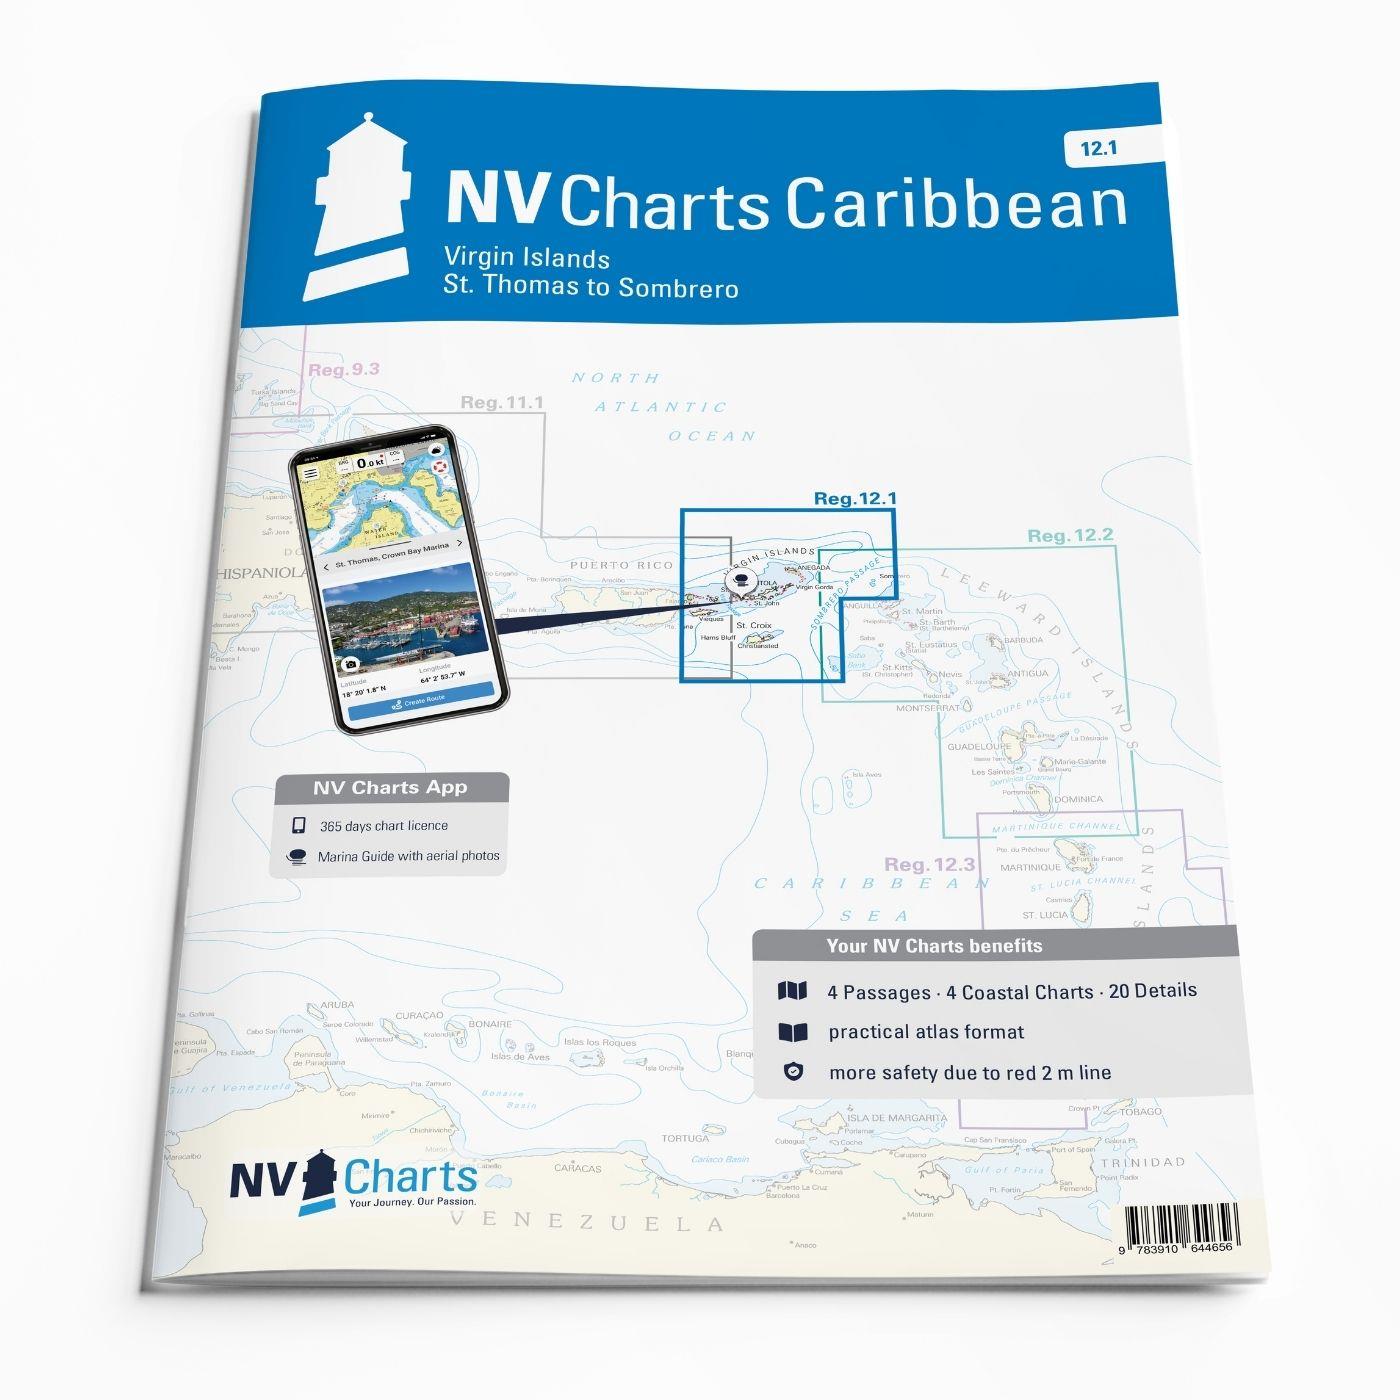 NV Charts Caribbean 12.1 - Virgin Islands